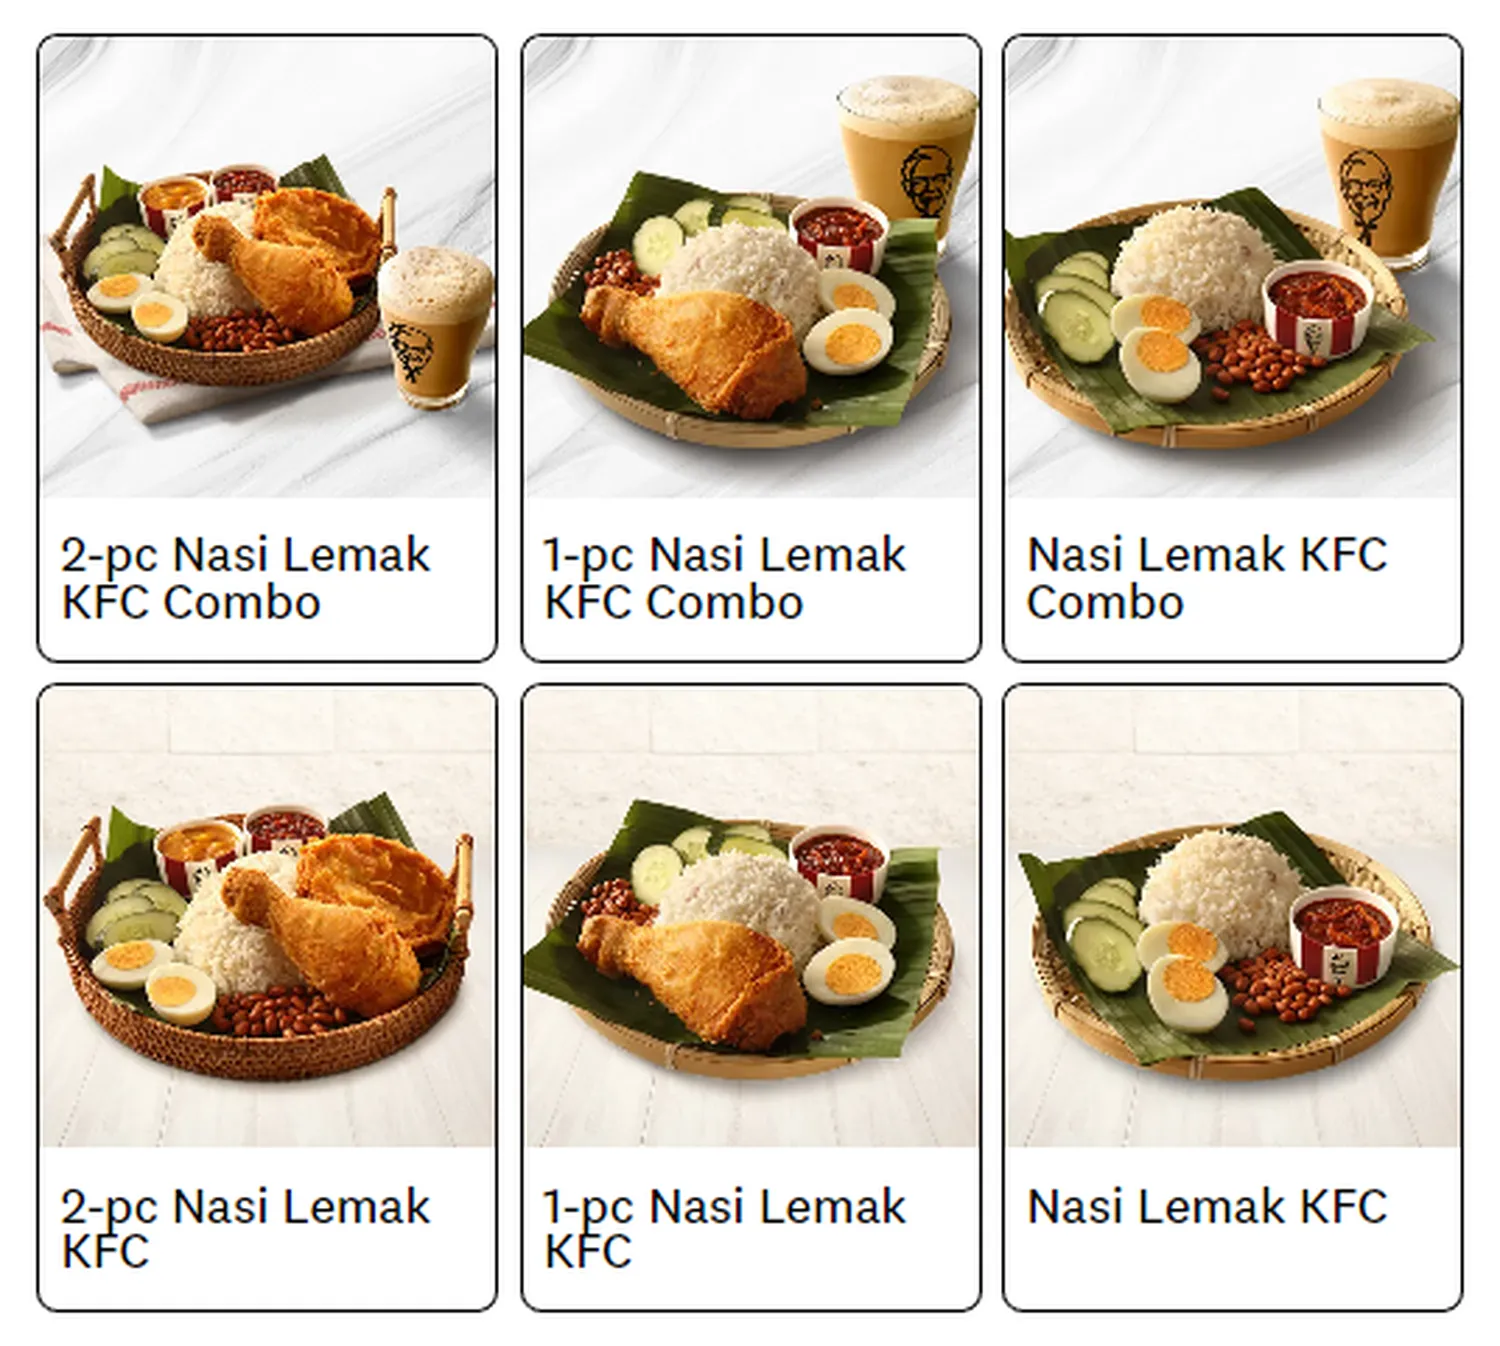 kfc breakfast menu malaysia nasi lemak kfc